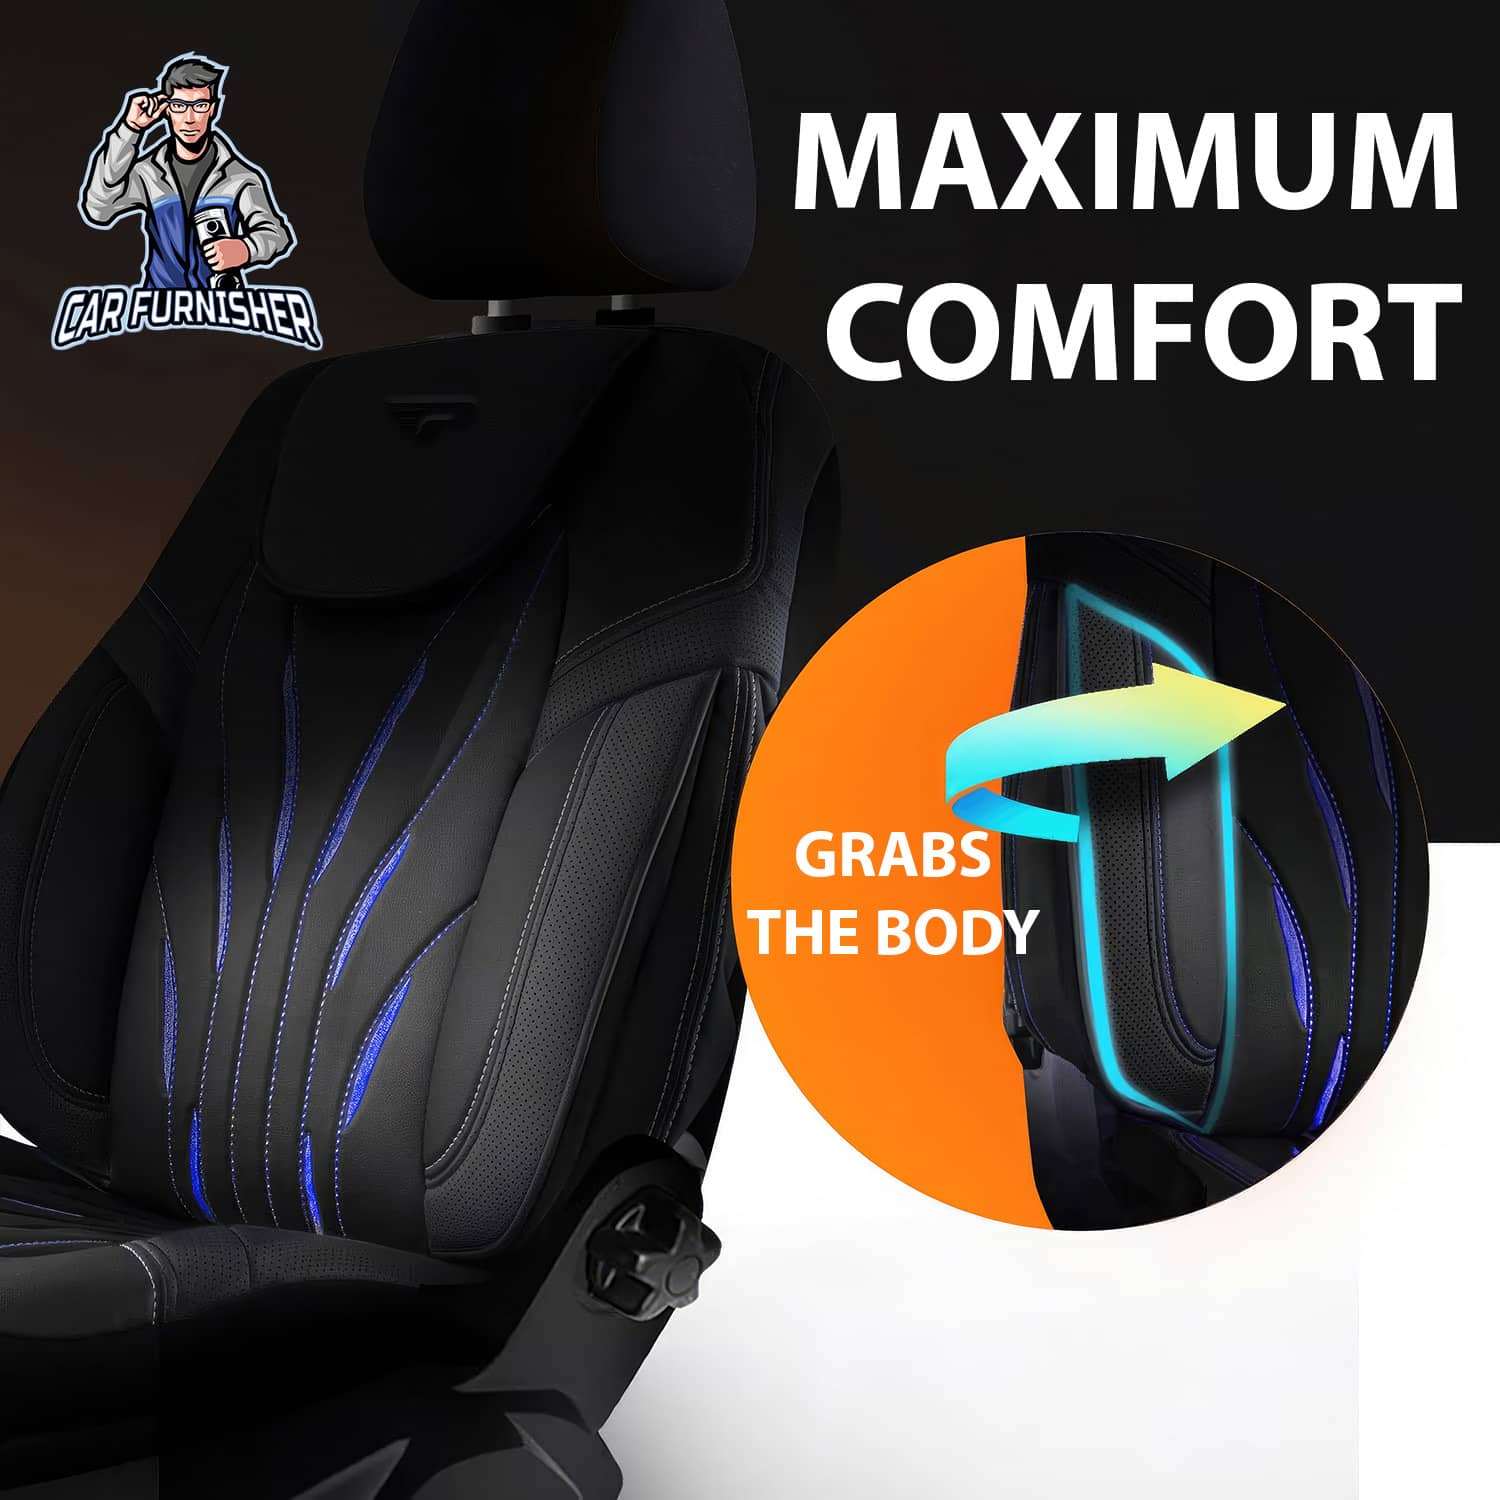 Car Seat Cover Set - Pars Design Dark Blue 5 Seats + Headrests (Full Set) Full Leather